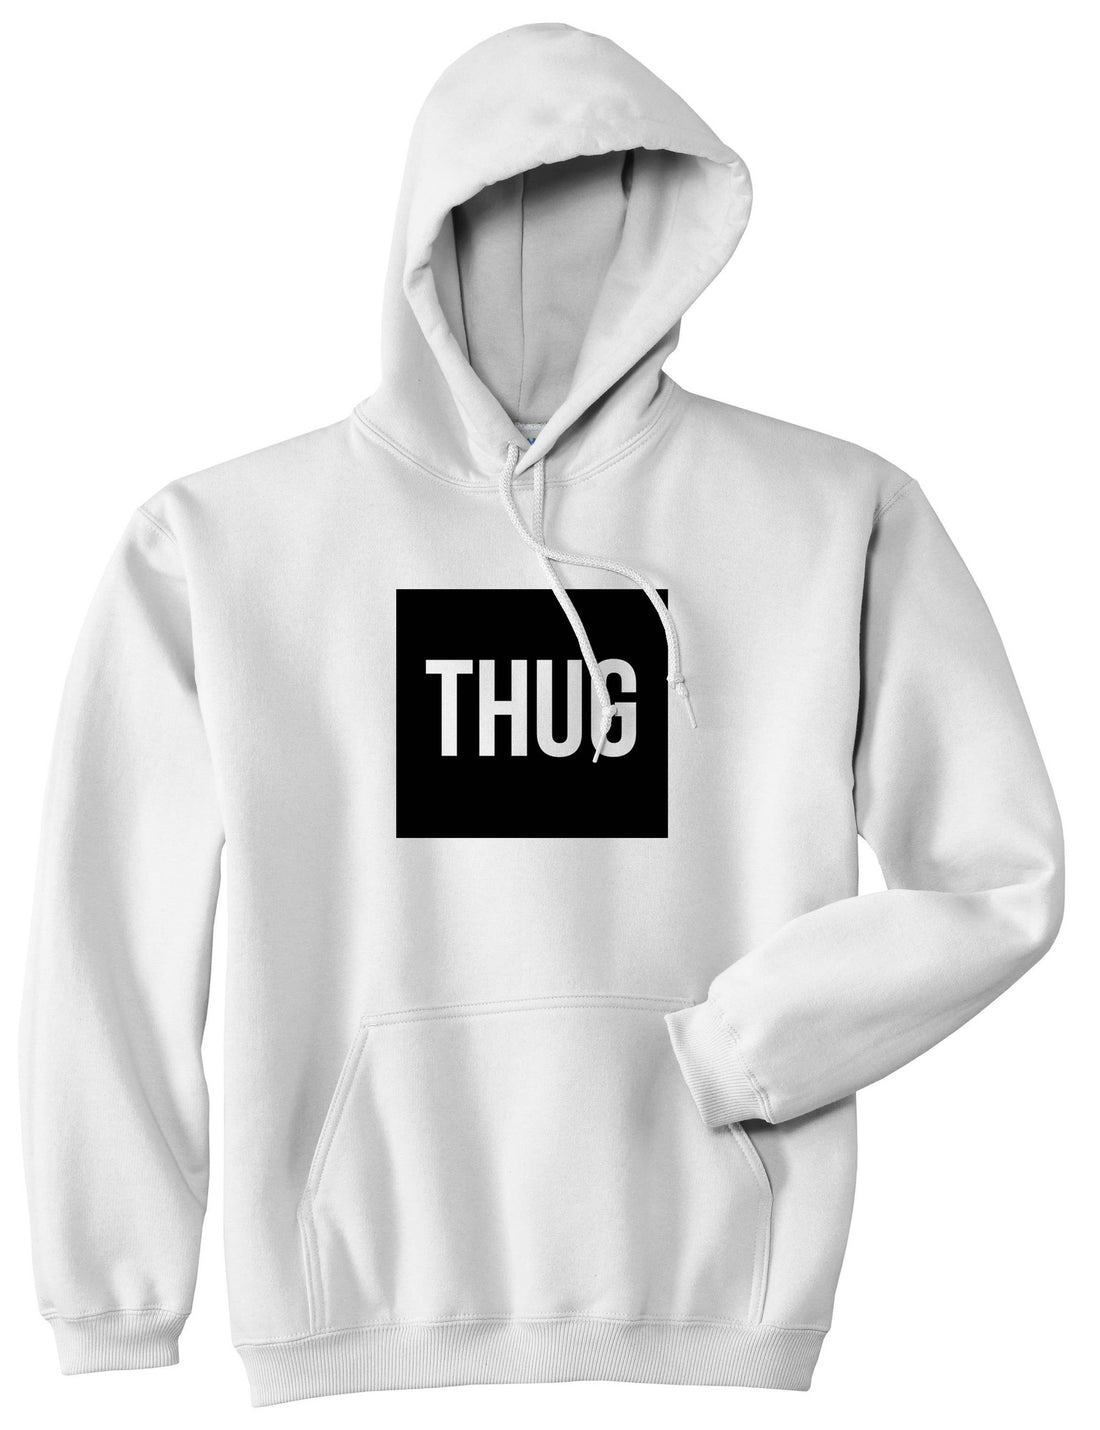 Thug Gangsta Box Logo Pullover Hoodie Hoody in White by Kings Of NY